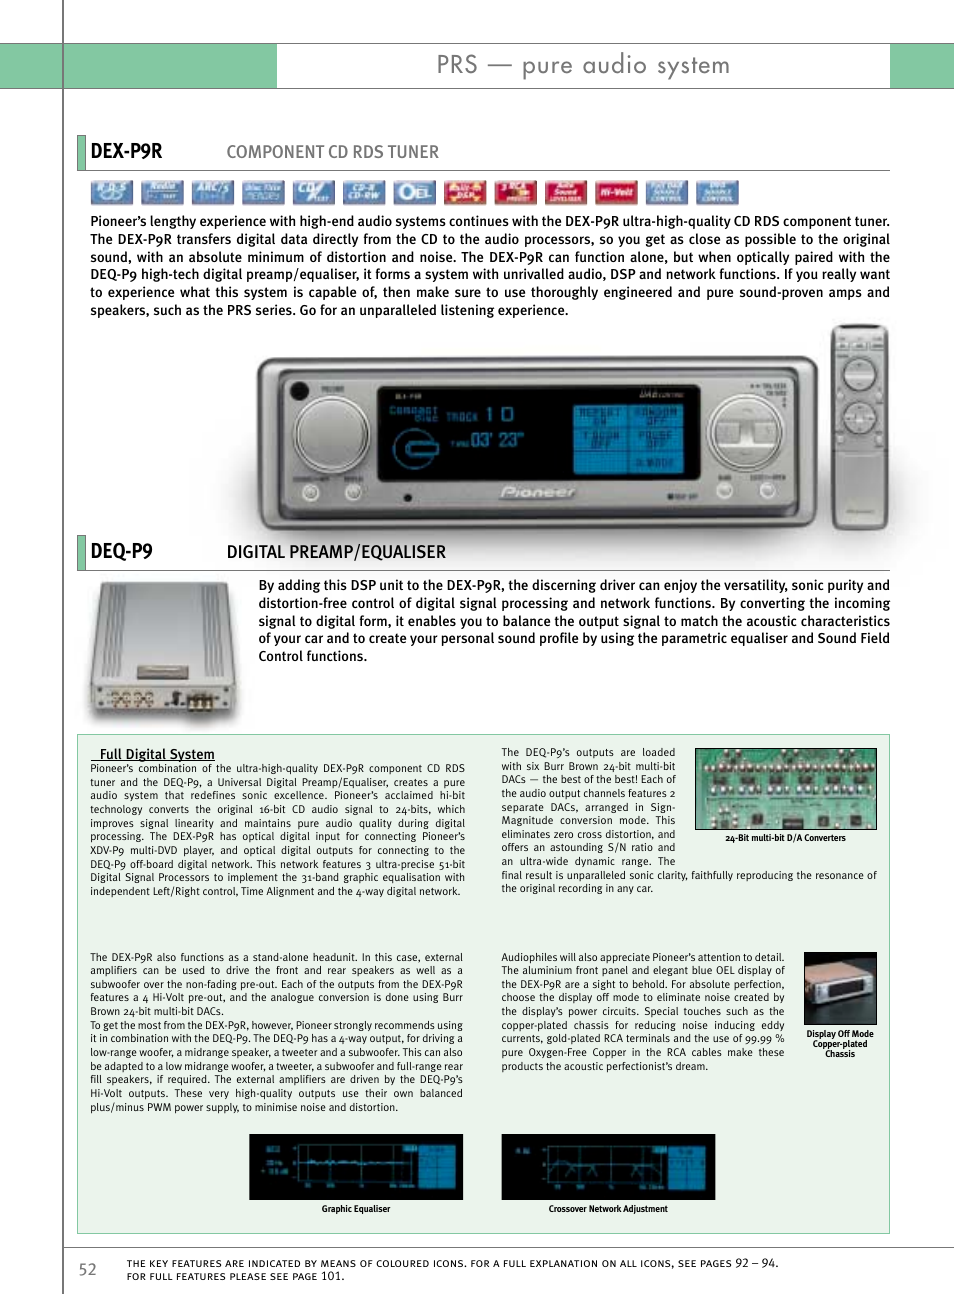 Prs — pure audio system, Dex-p9r, Deq-p9 | Pioneer Reference Series DEX-P9R  User Manual | Page 2 / 52 | Original mode